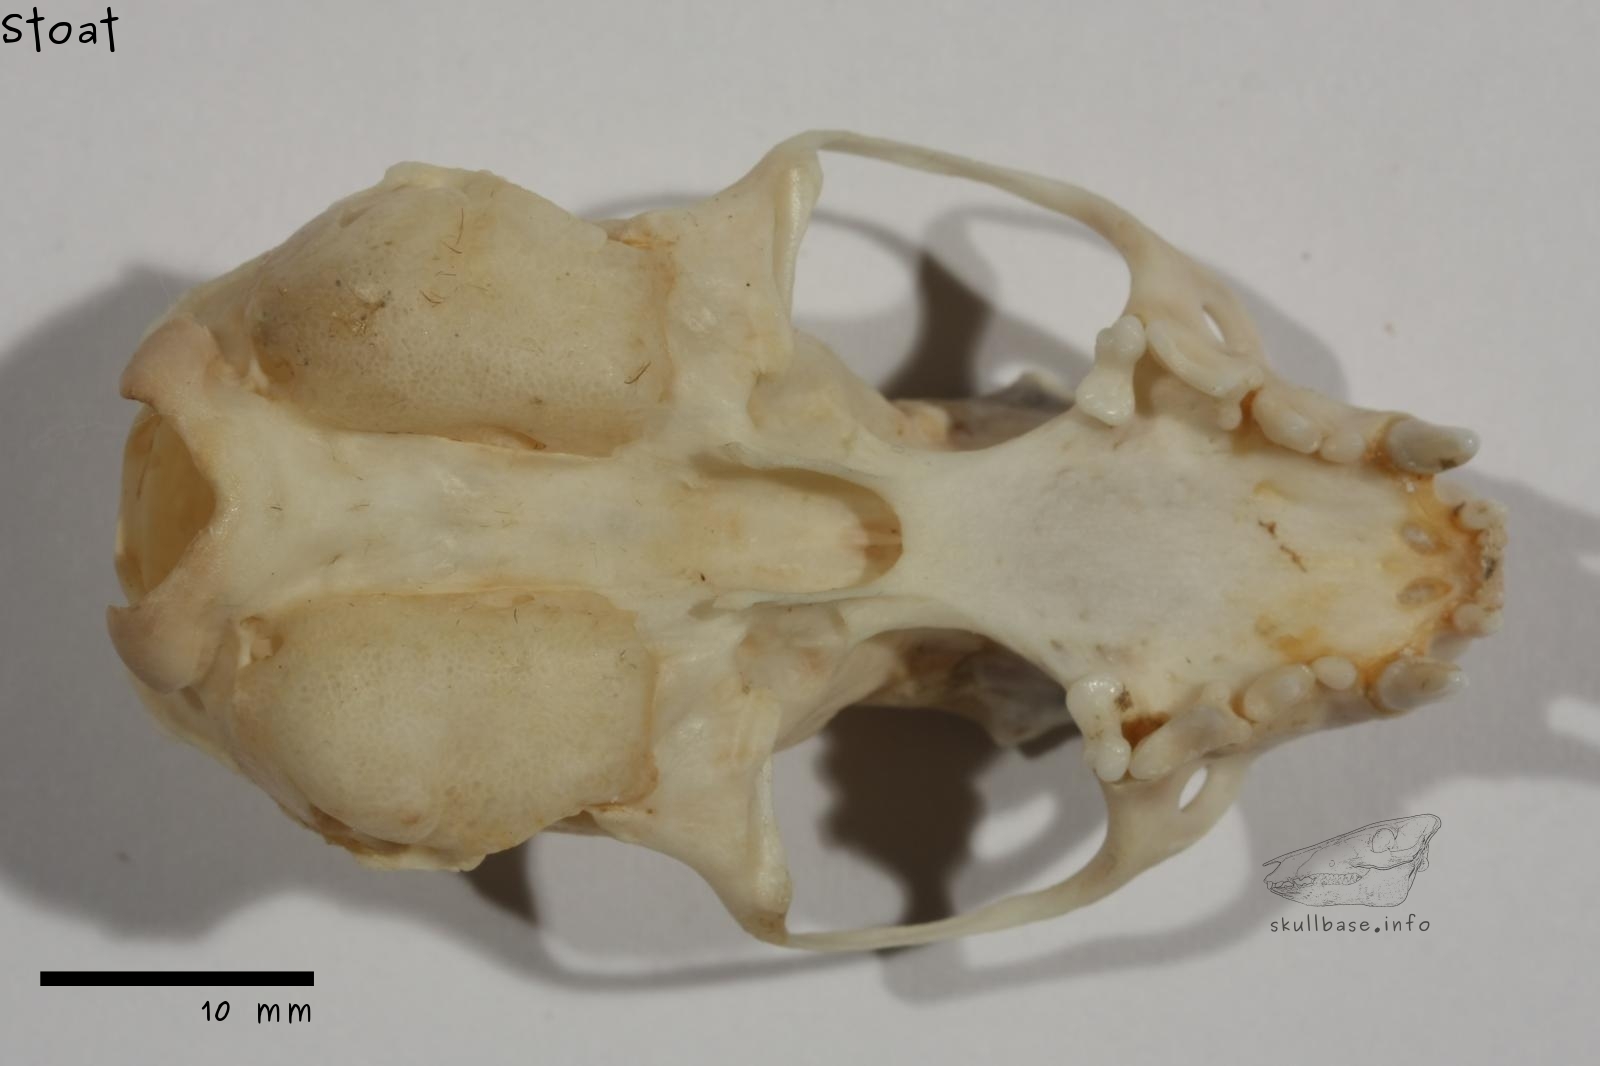 Stoat (Mustela erminea) skull ventral view